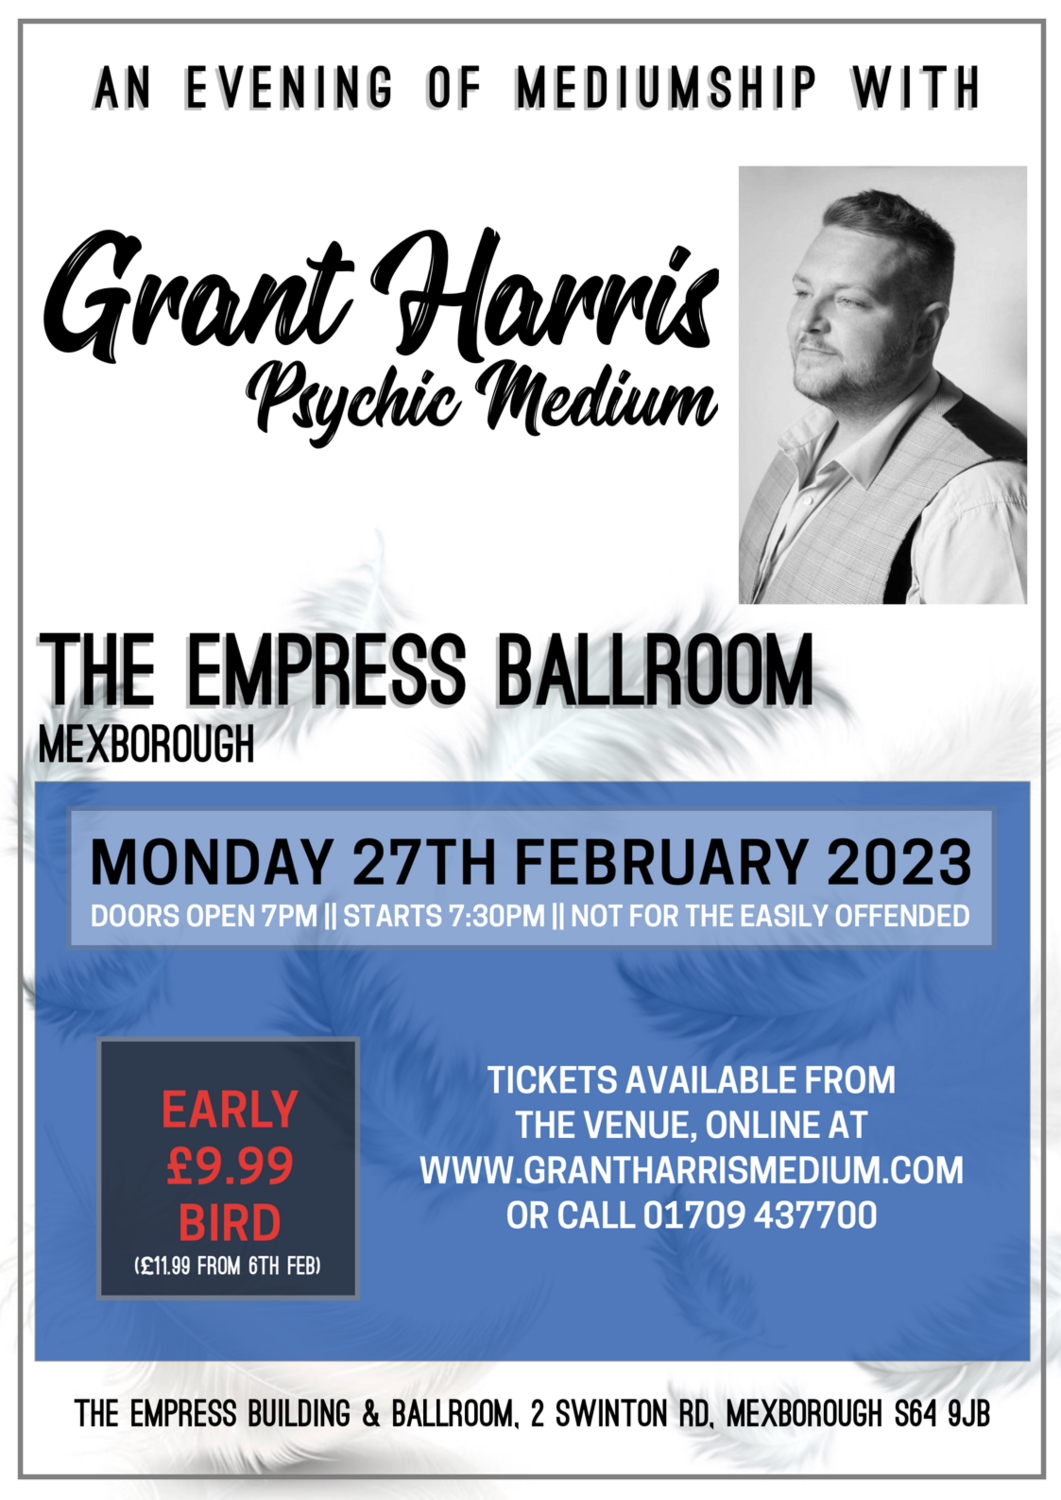 The Empress Building & Ballroom, Mexborough, Monday 27th Feb 2023